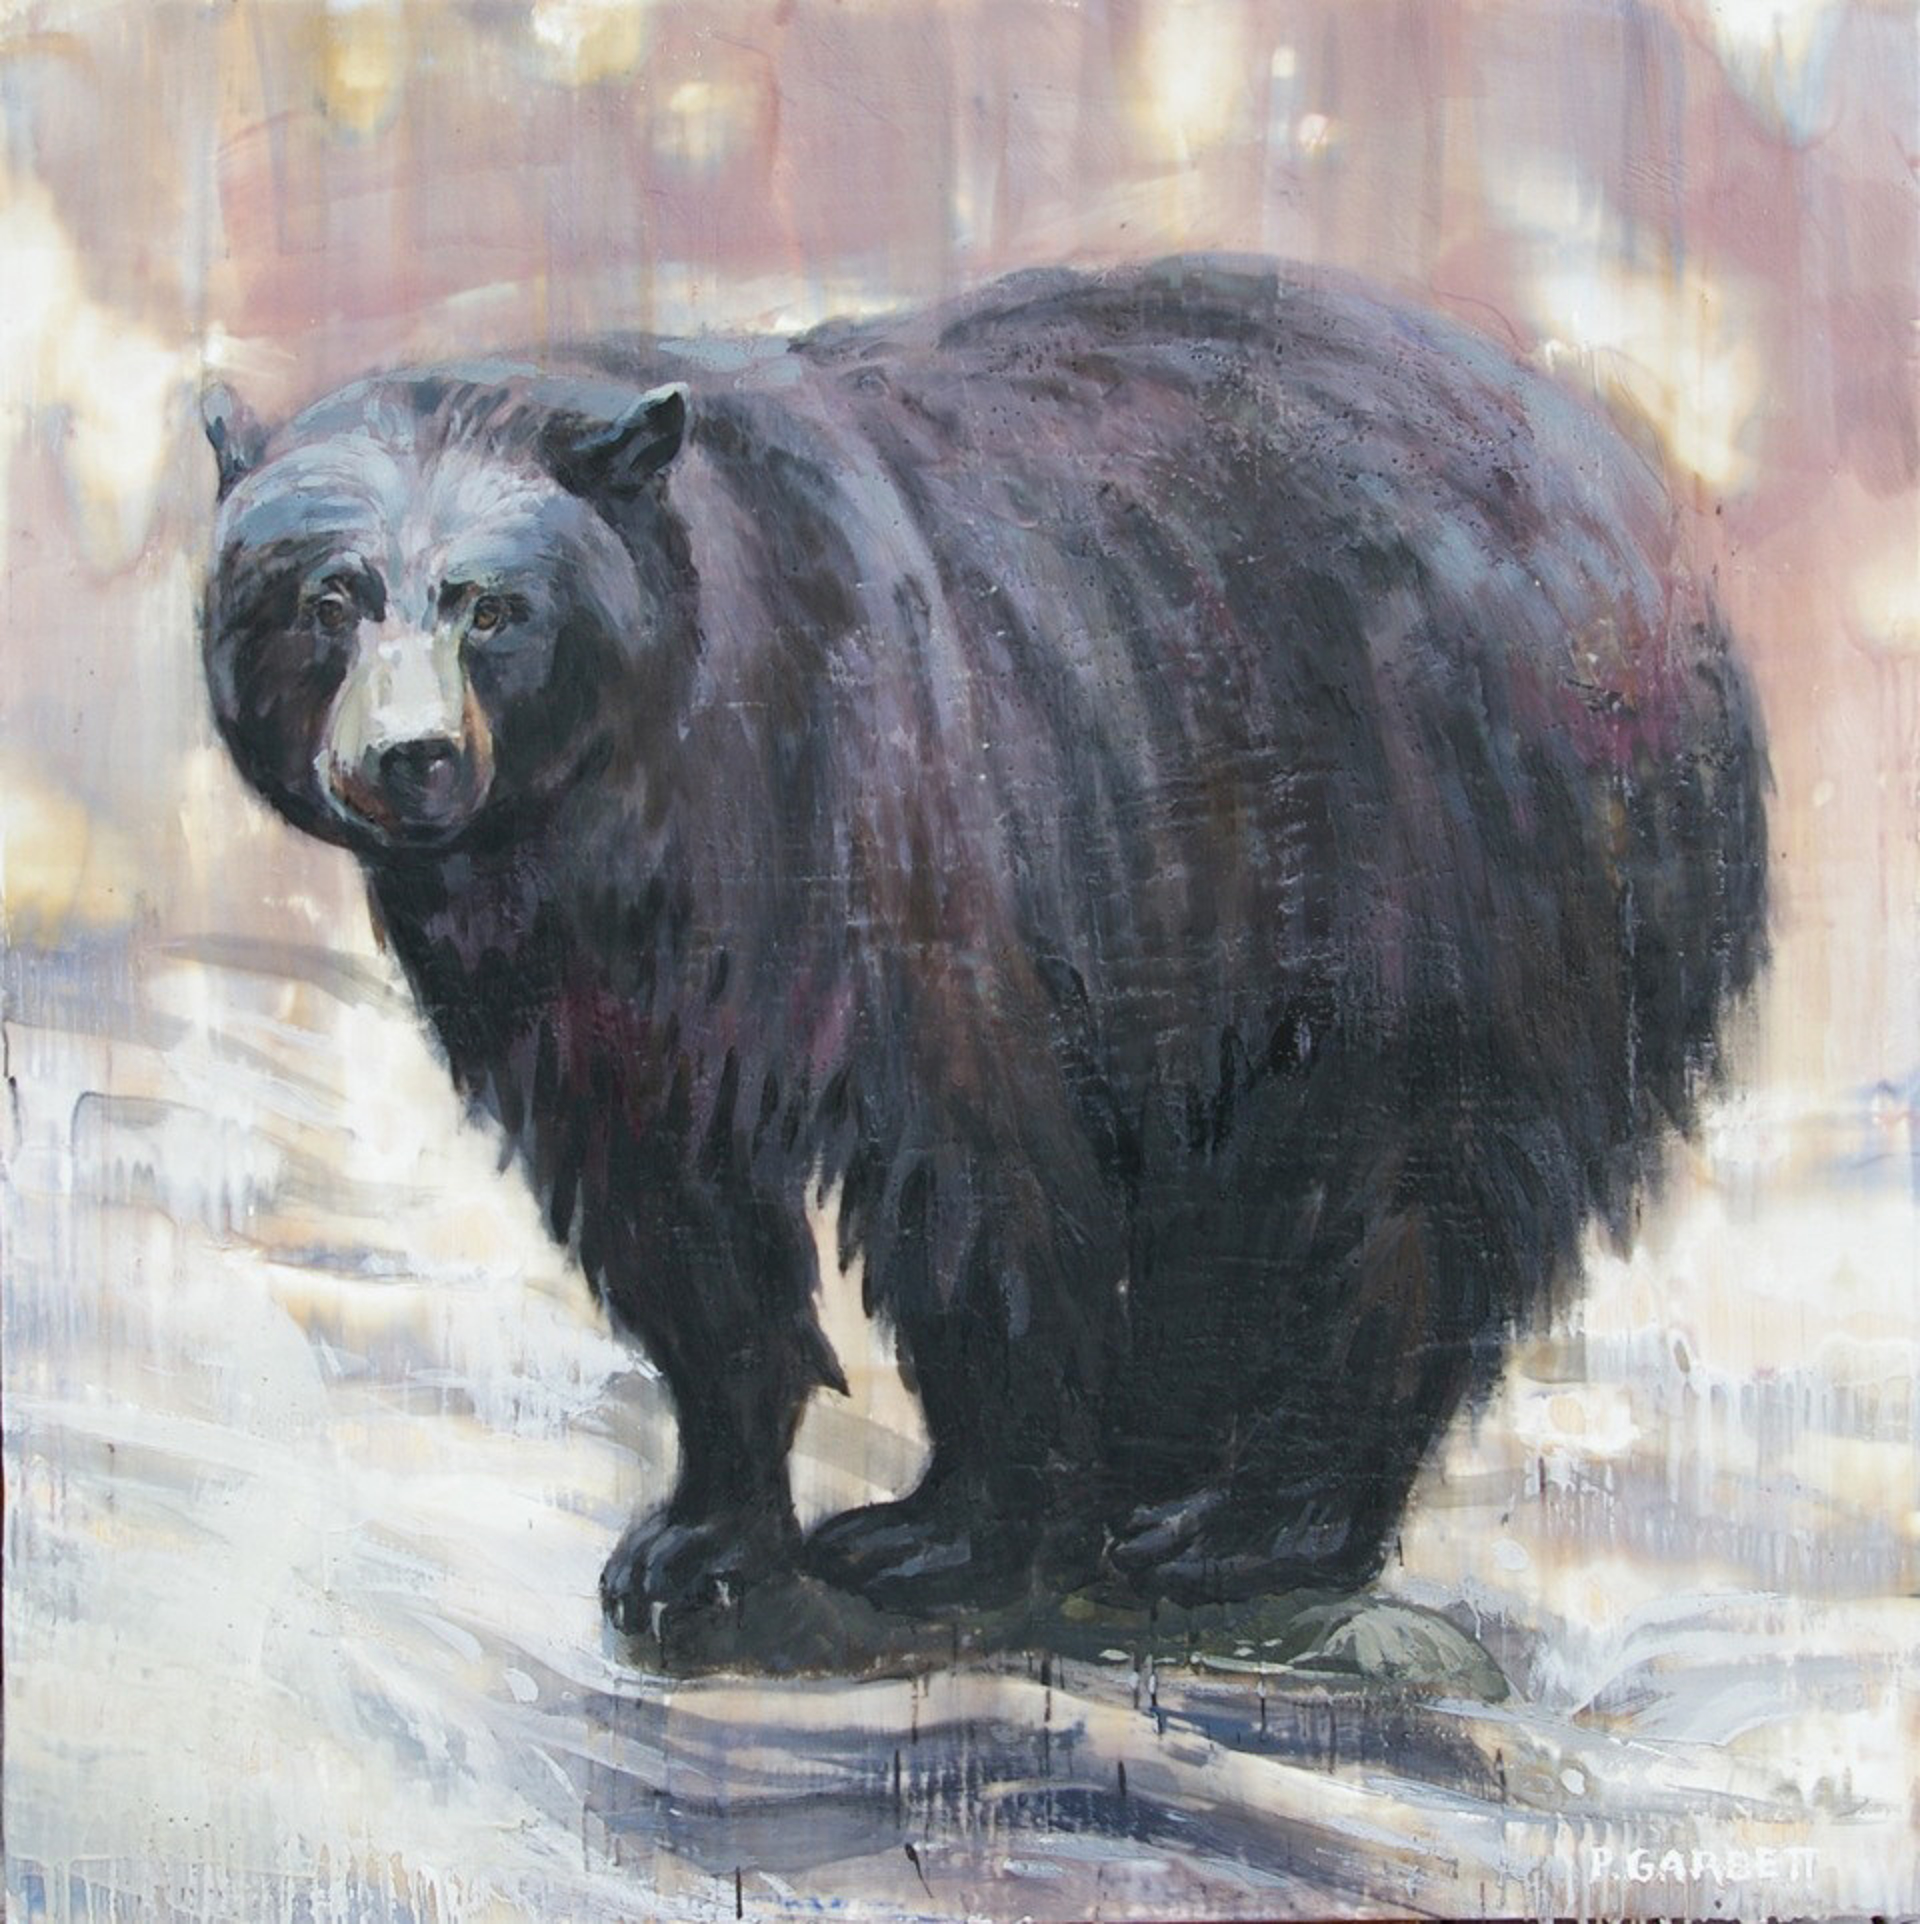 Black Bear 57-16 by Paul Garbett